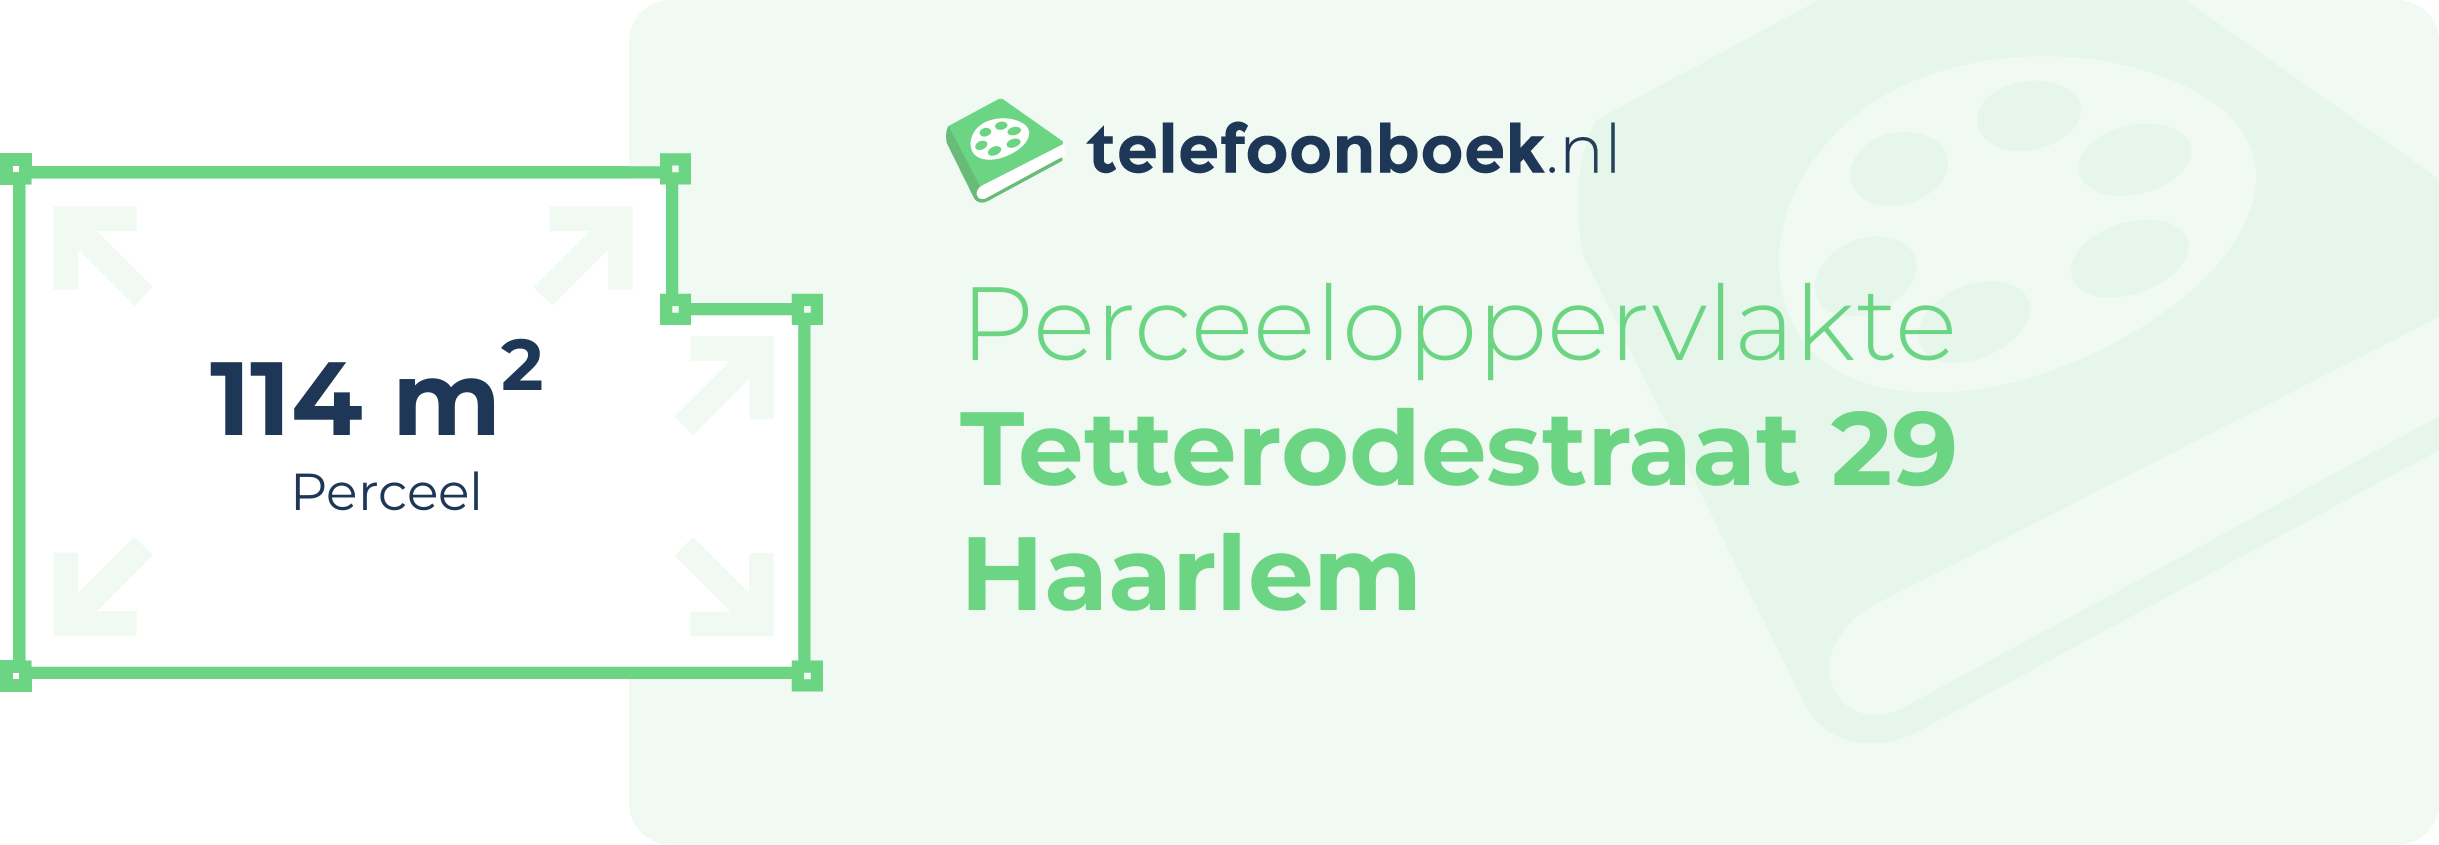 Perceeloppervlakte Tetterodestraat 29 Haarlem